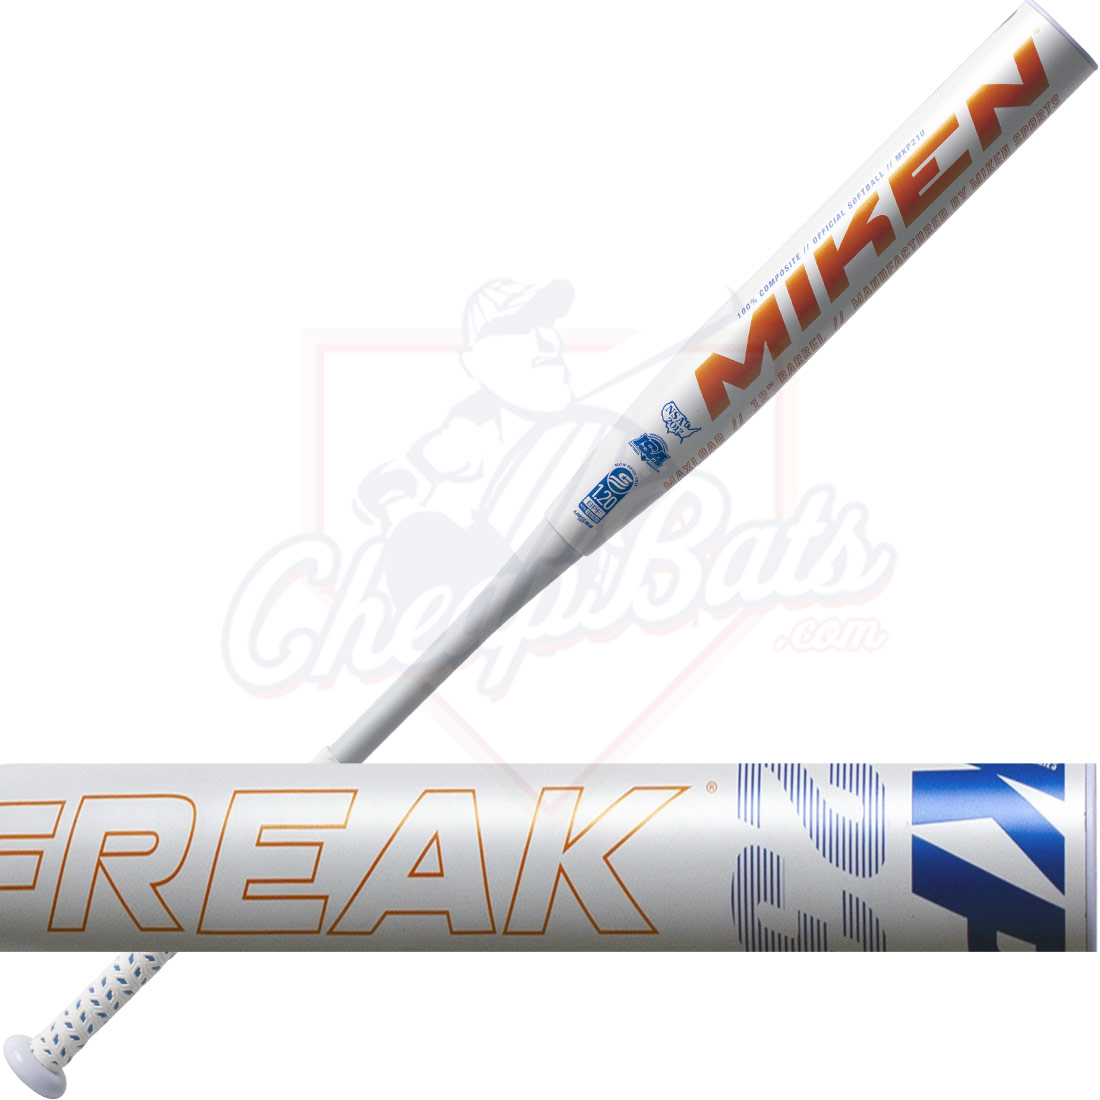 2021 Miken Freak 23 Slowpitch Softball Bat Maxload USSSA MKP21U